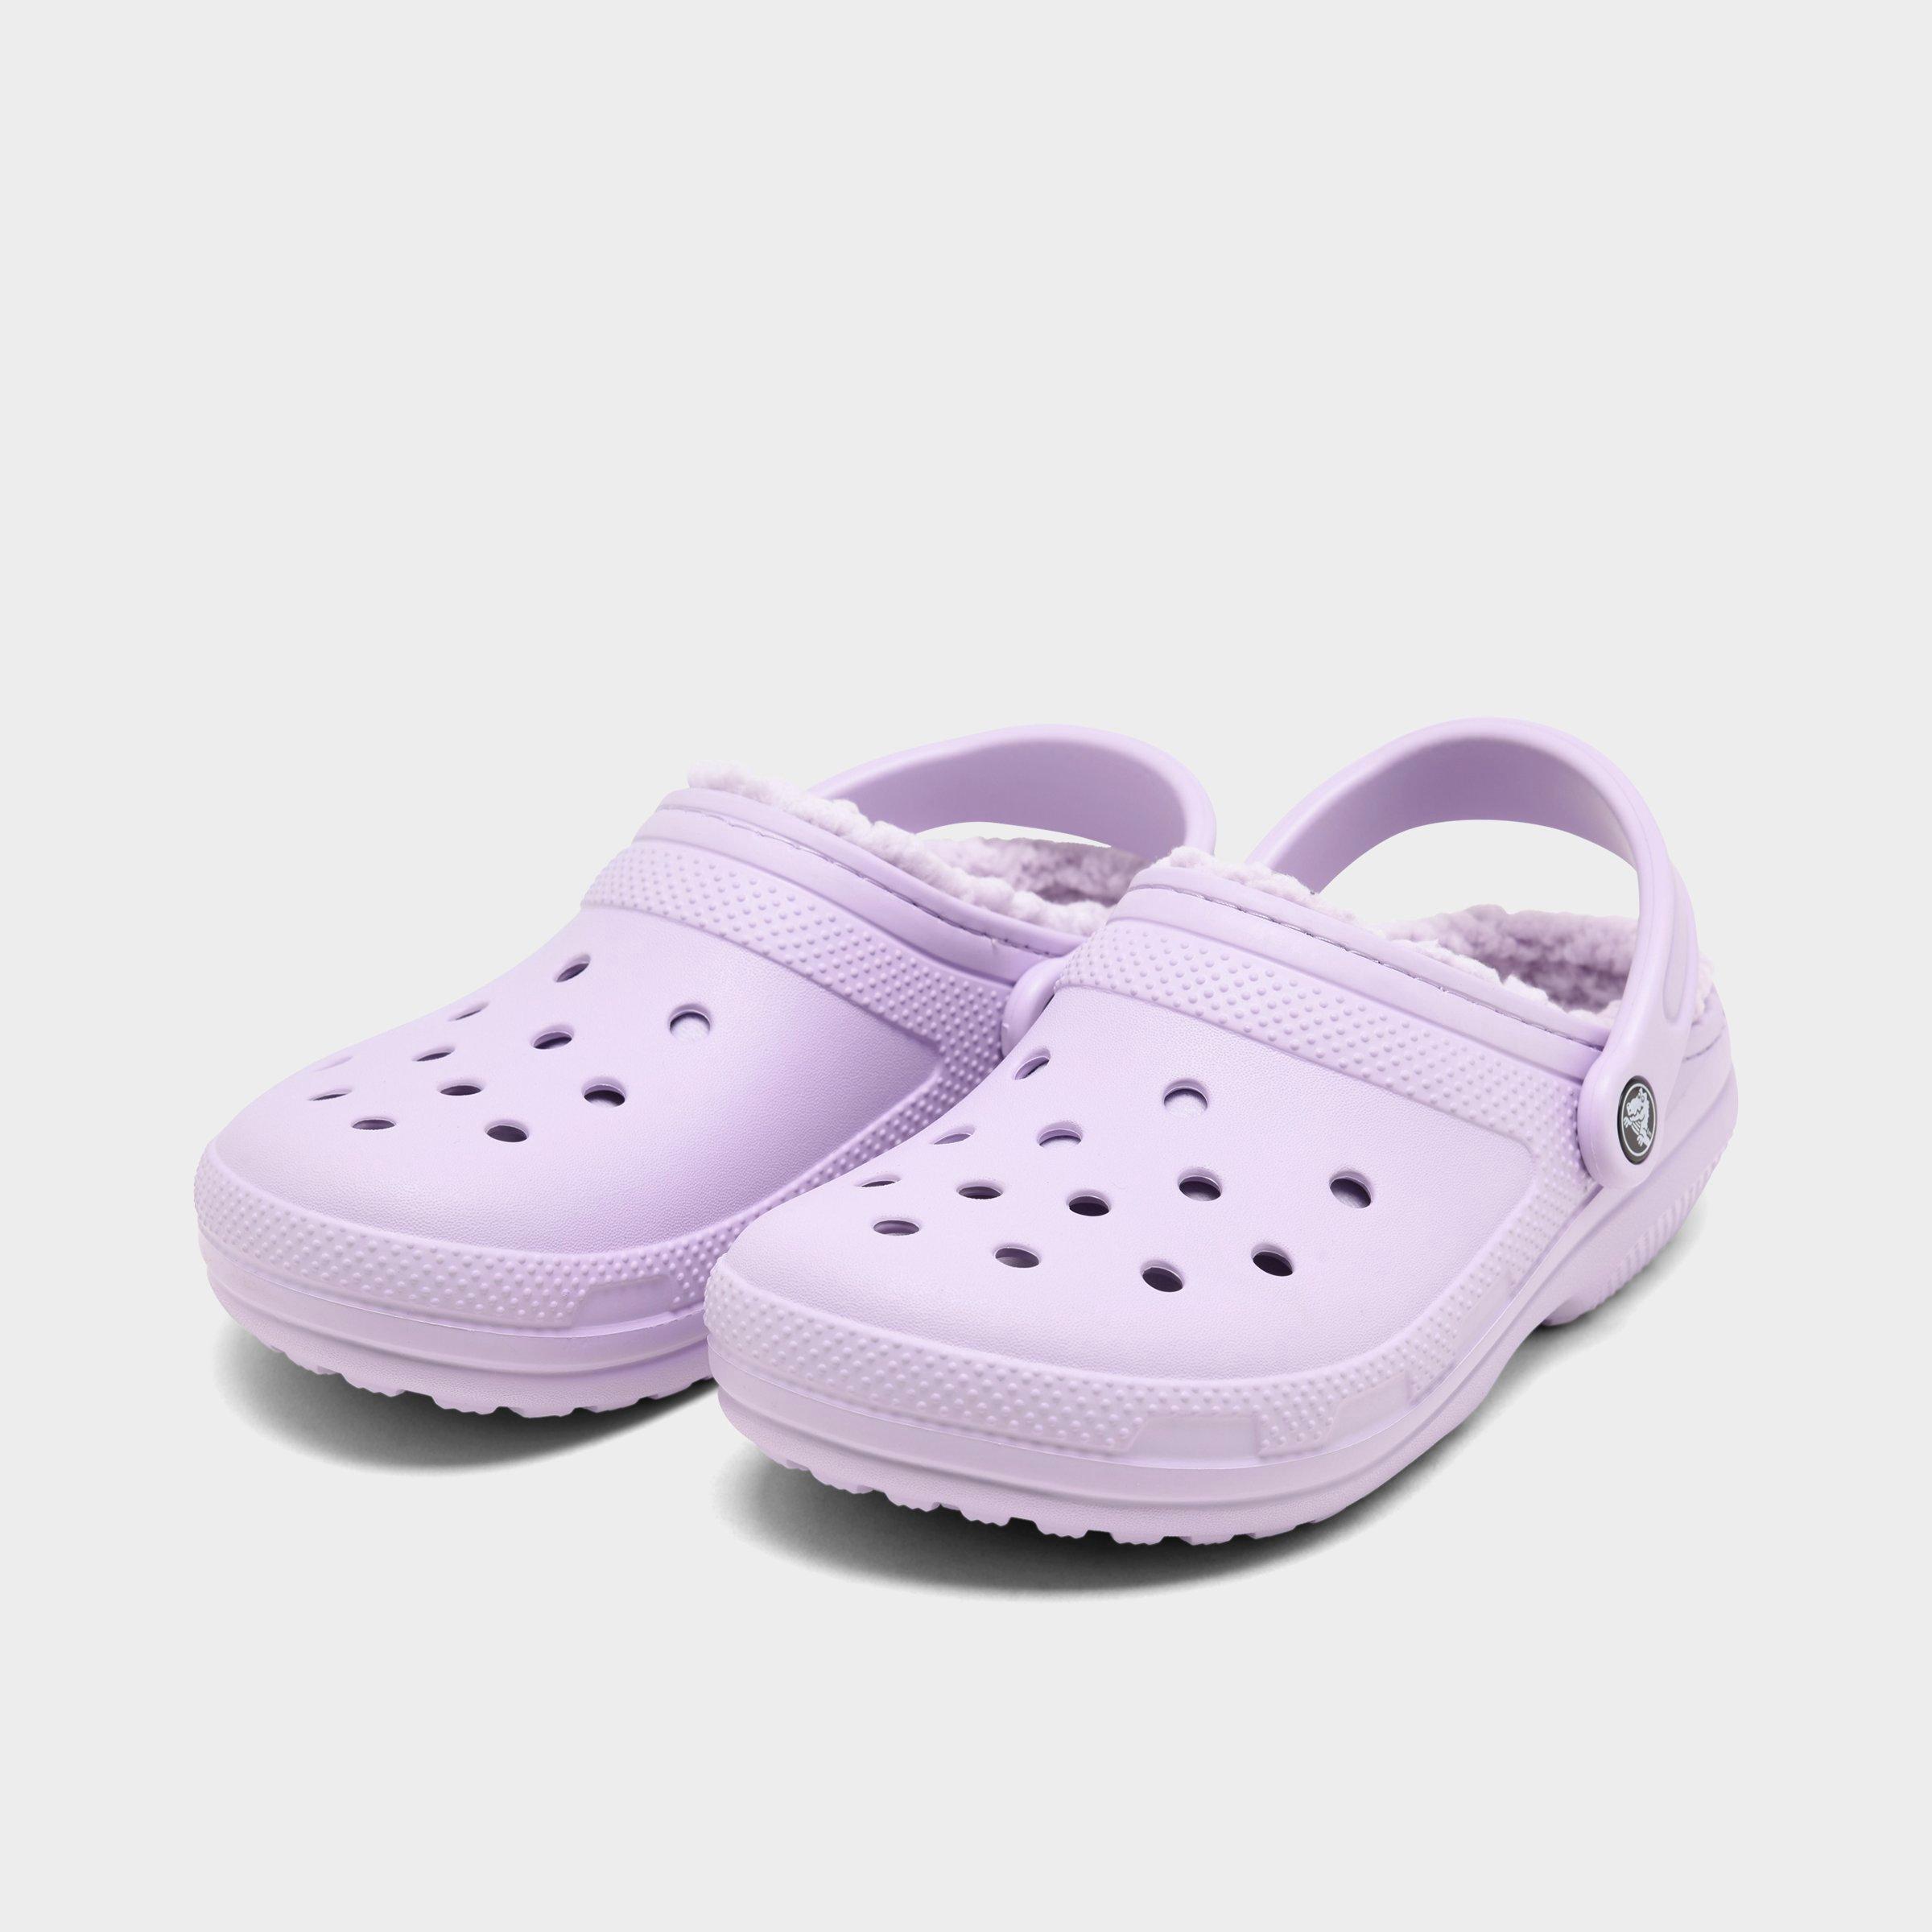 lavender lined crocs size 6